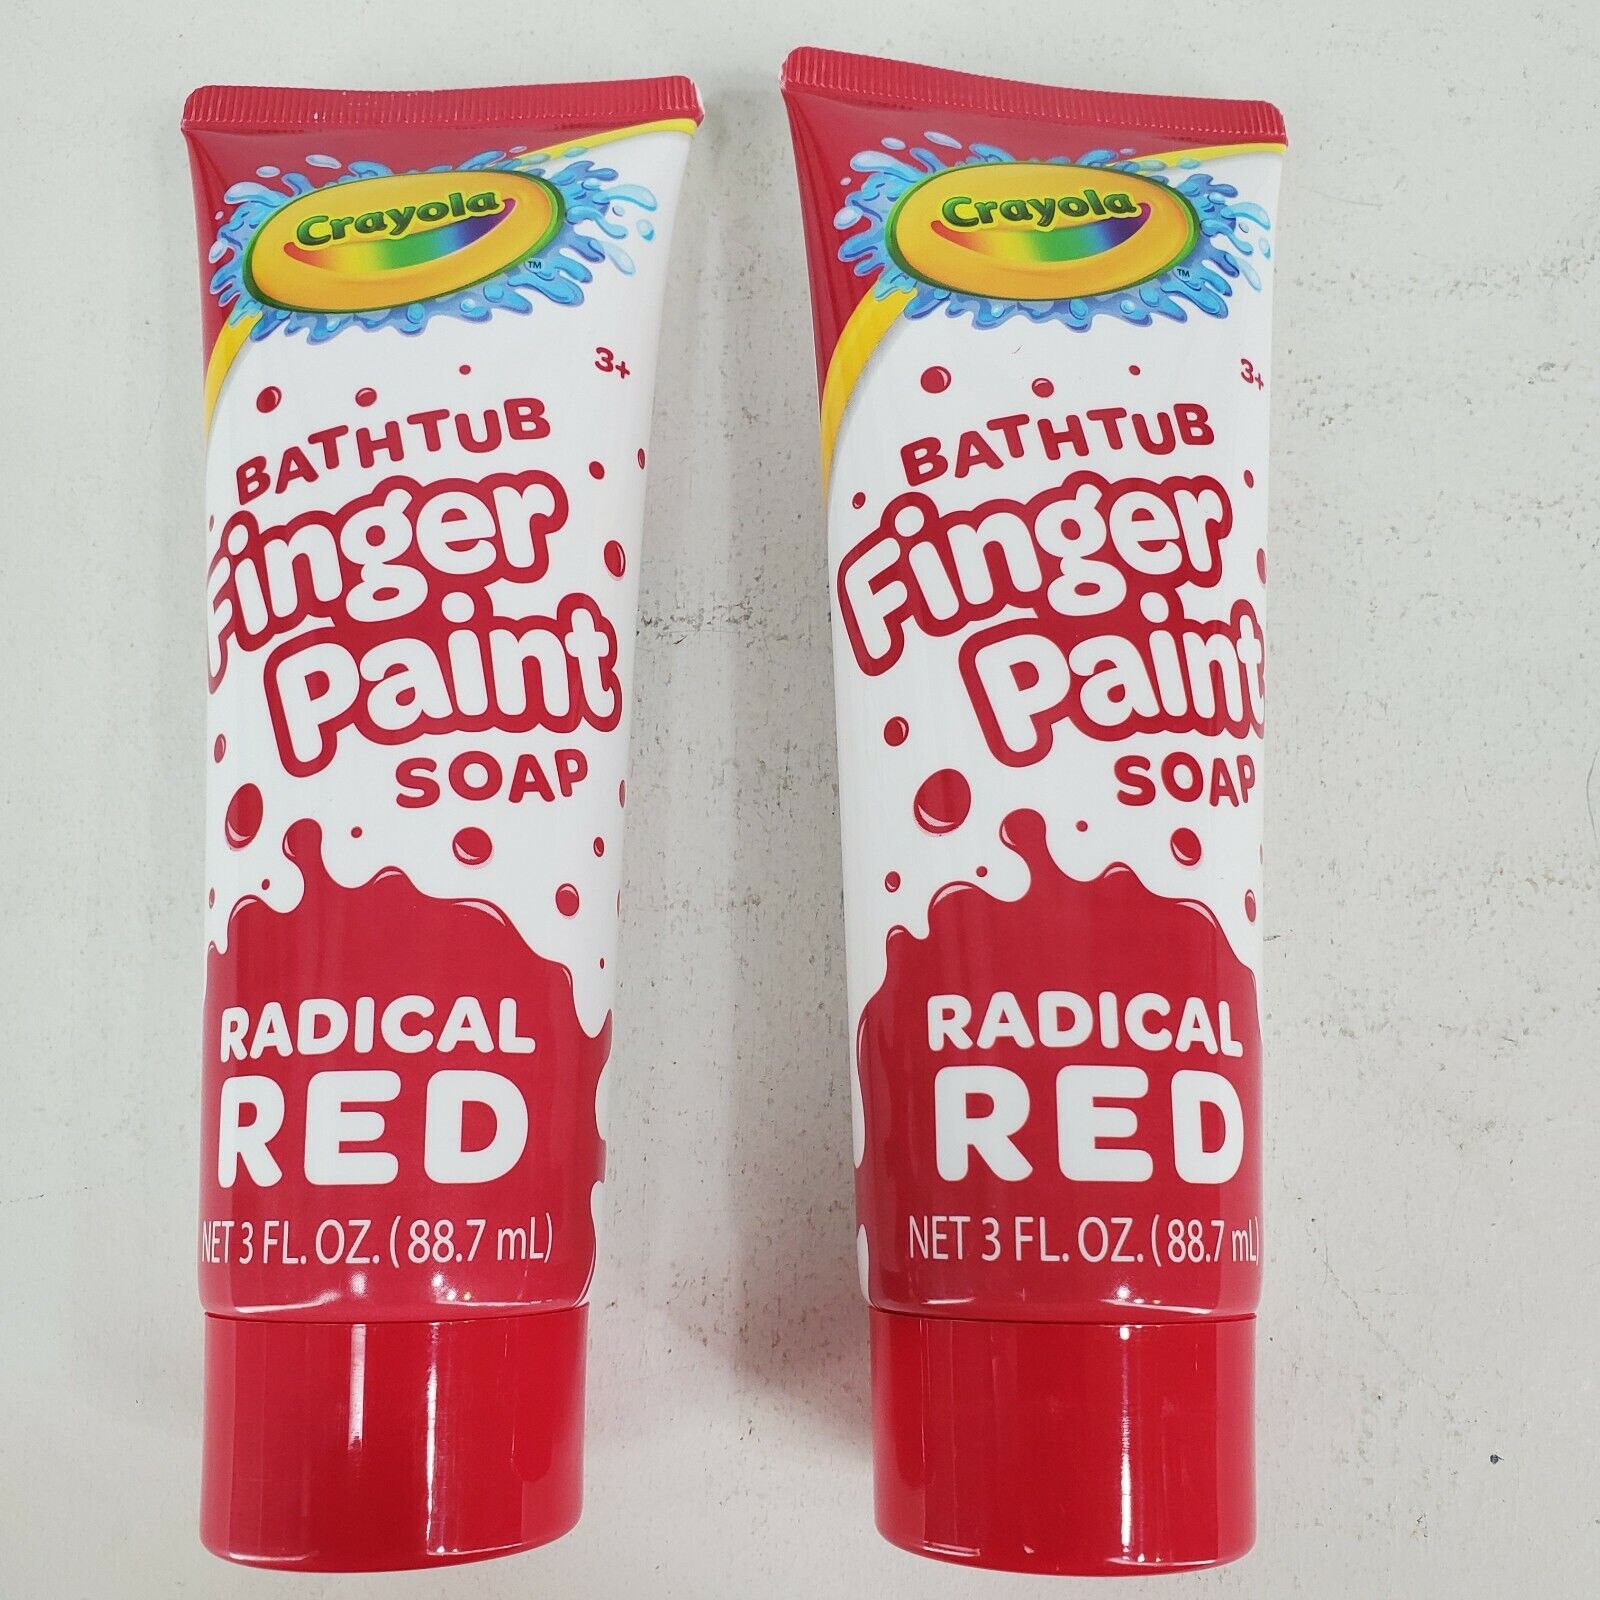 Crayola Bath Tub Finger Paint Soap Radical Red 3 oz. each Lot of 2 Ages 3+ New Crayola 200701BHZ